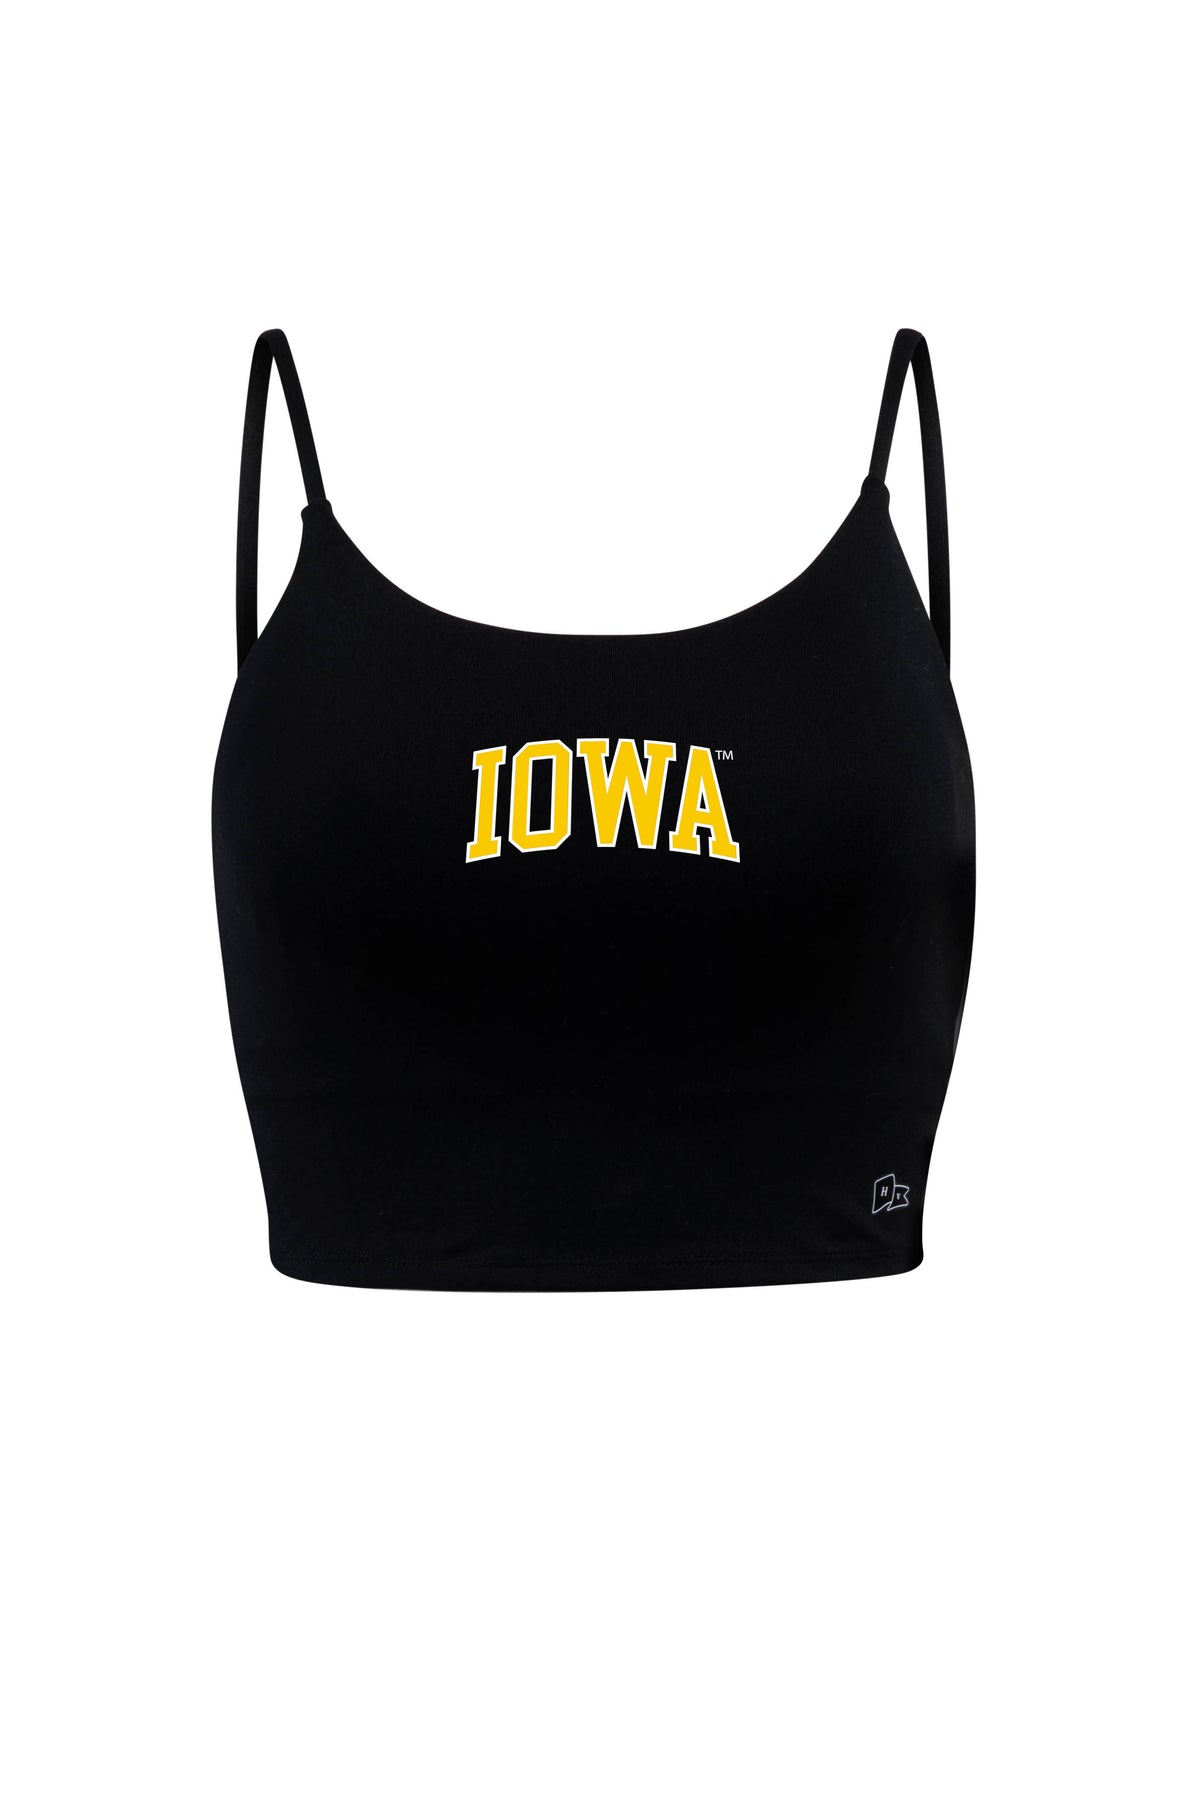 University of Iowa Bra Tank Top